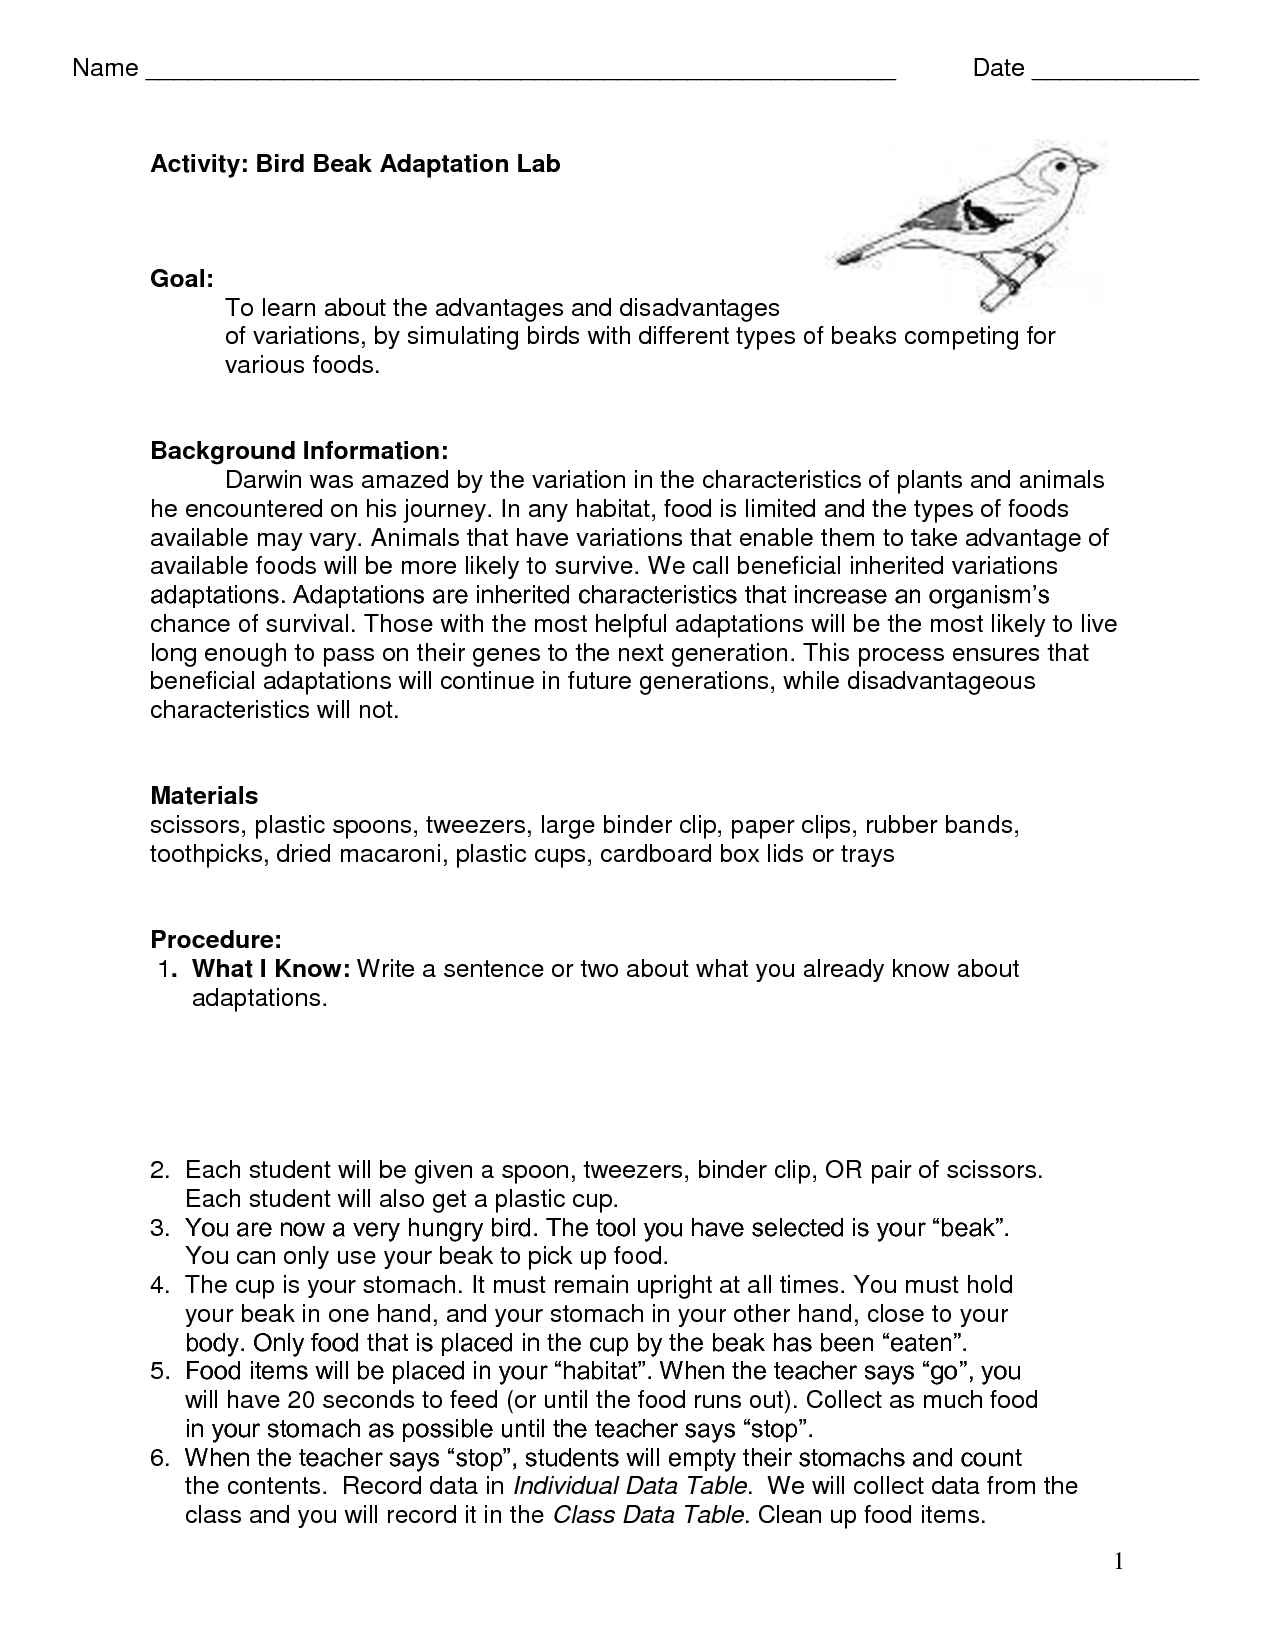 Bird Beak Adaptation Activity Worksheet Image